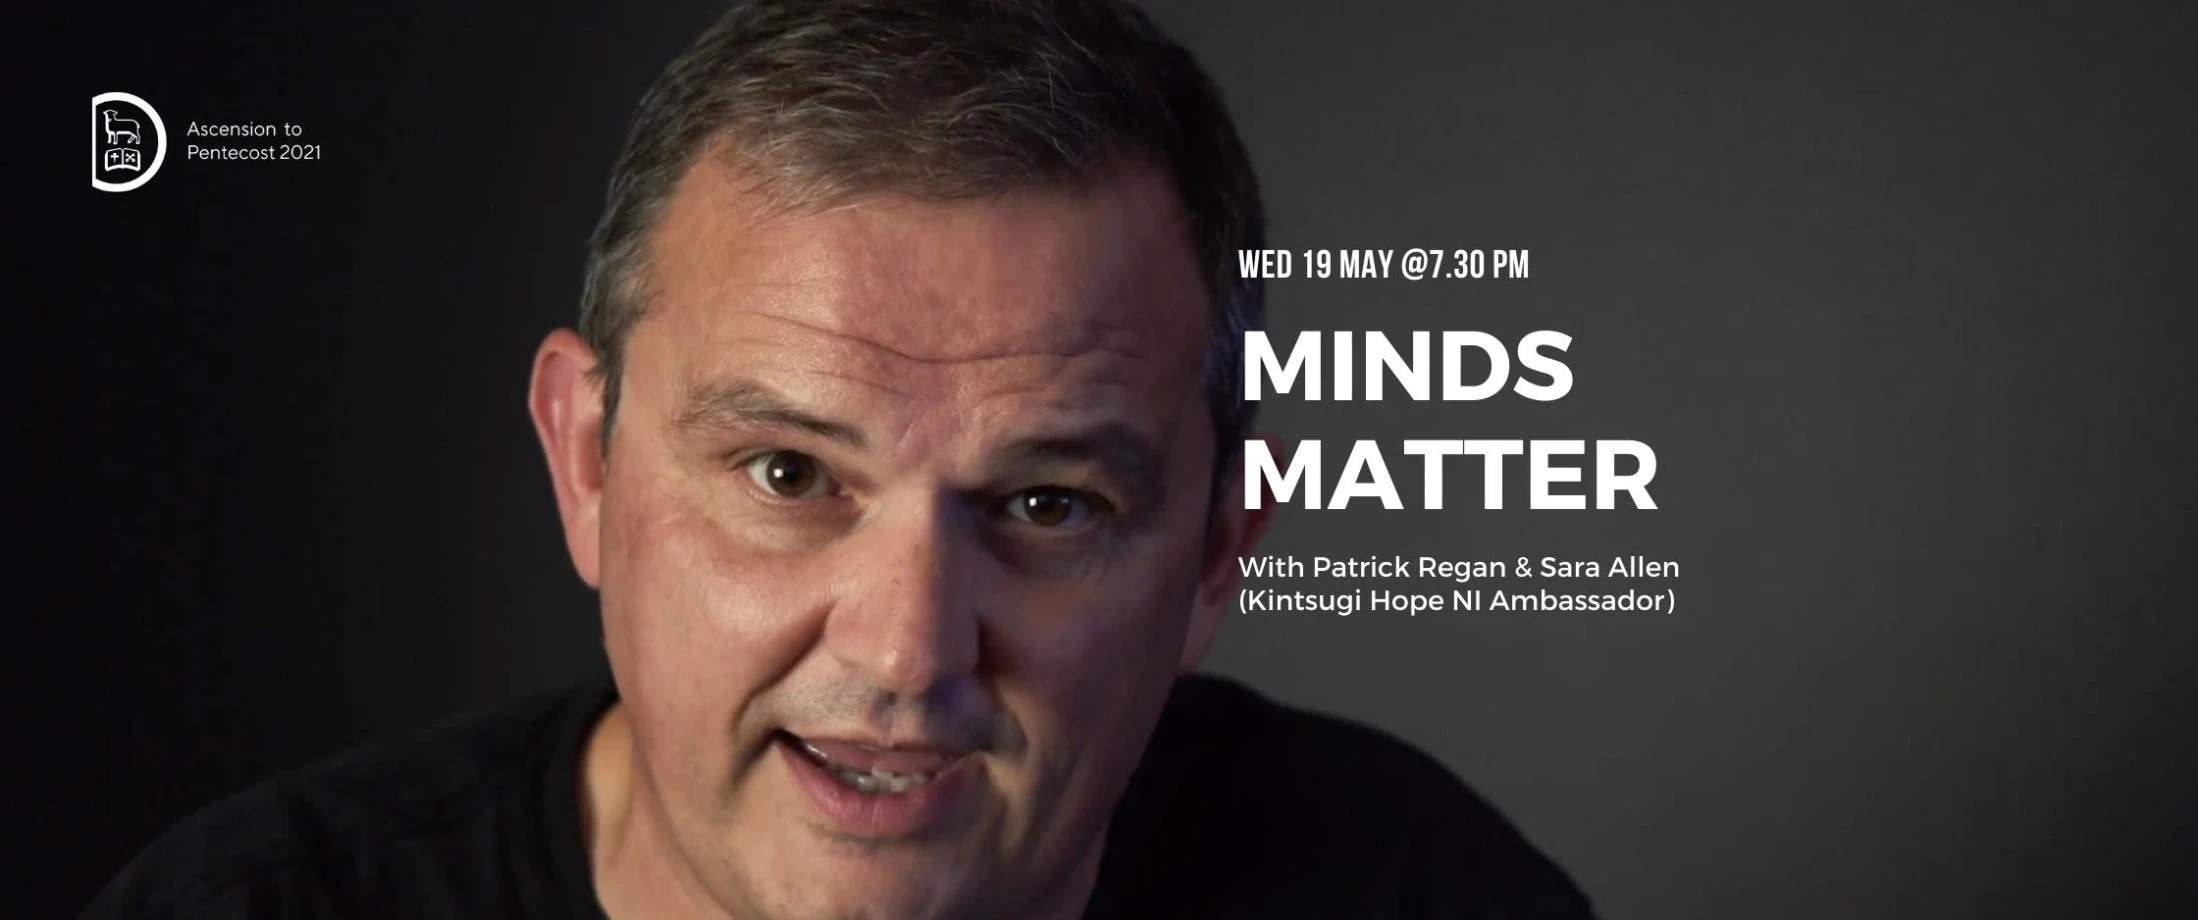 Minds Matter with Patrick Regan & Sara Allen